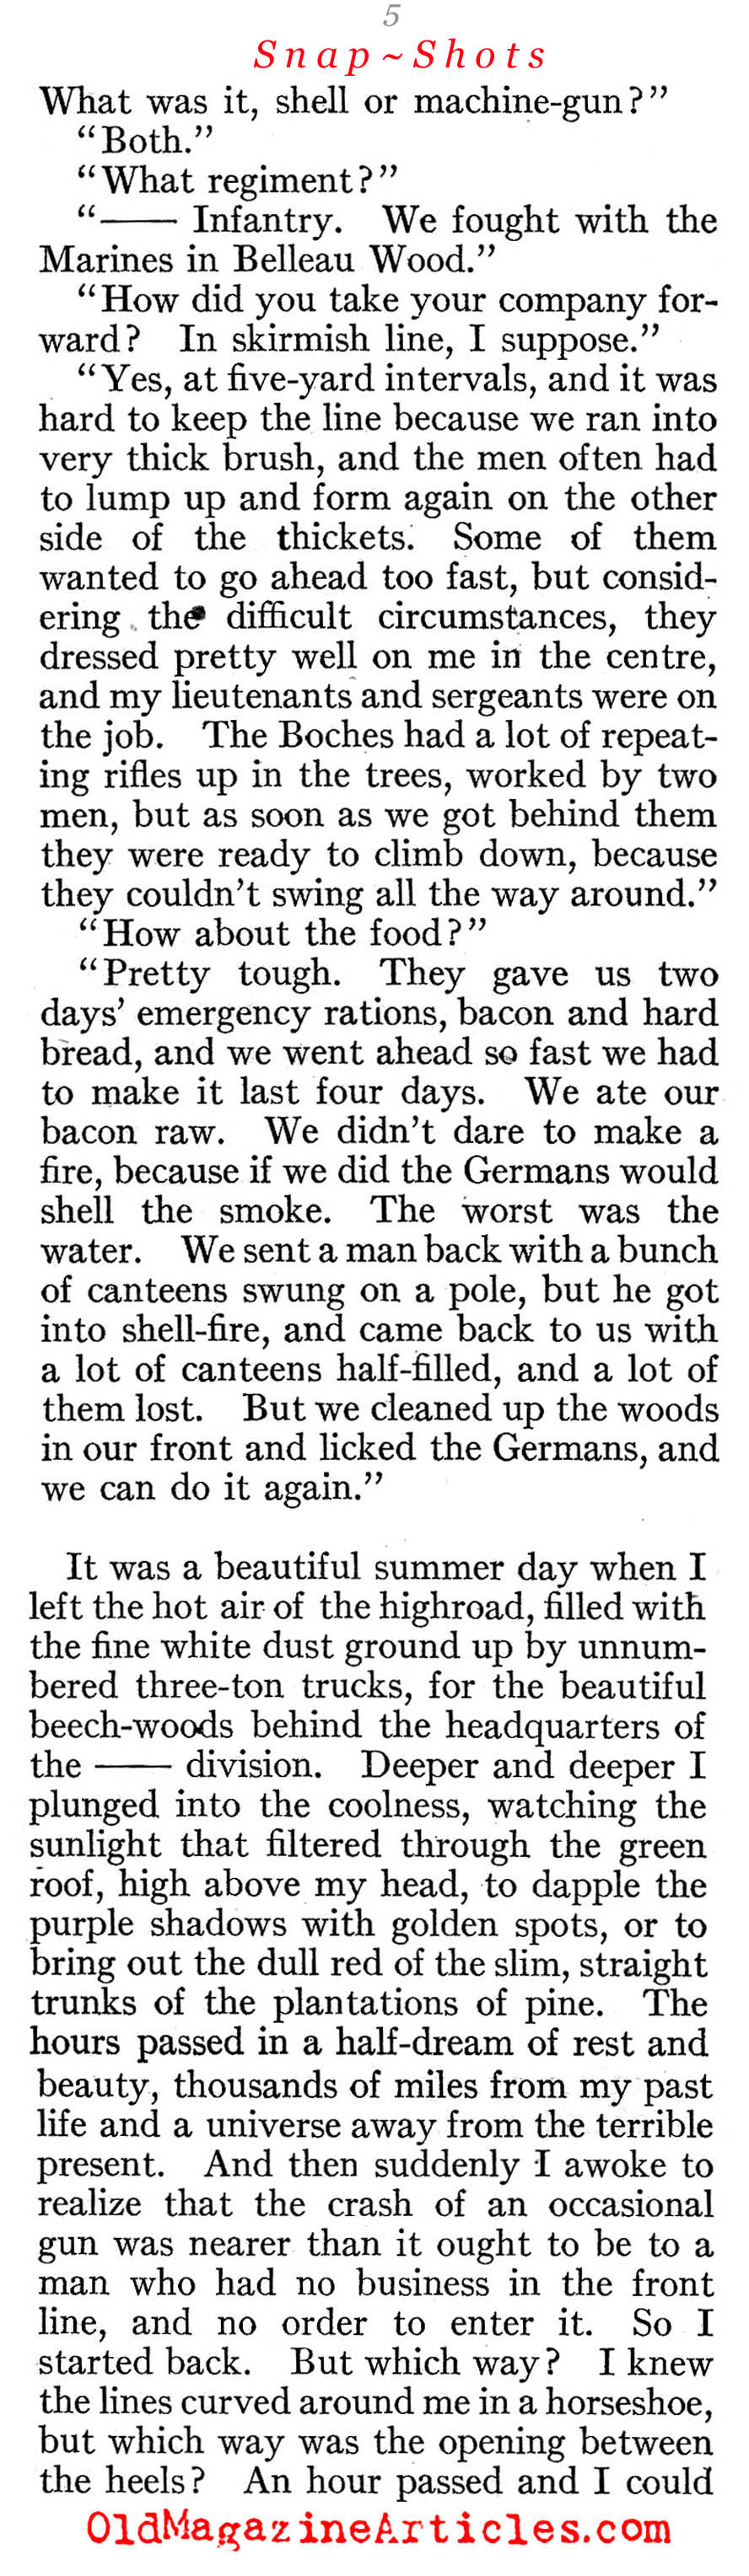 Scenes From The War (Scribner's Magazine, 1919)